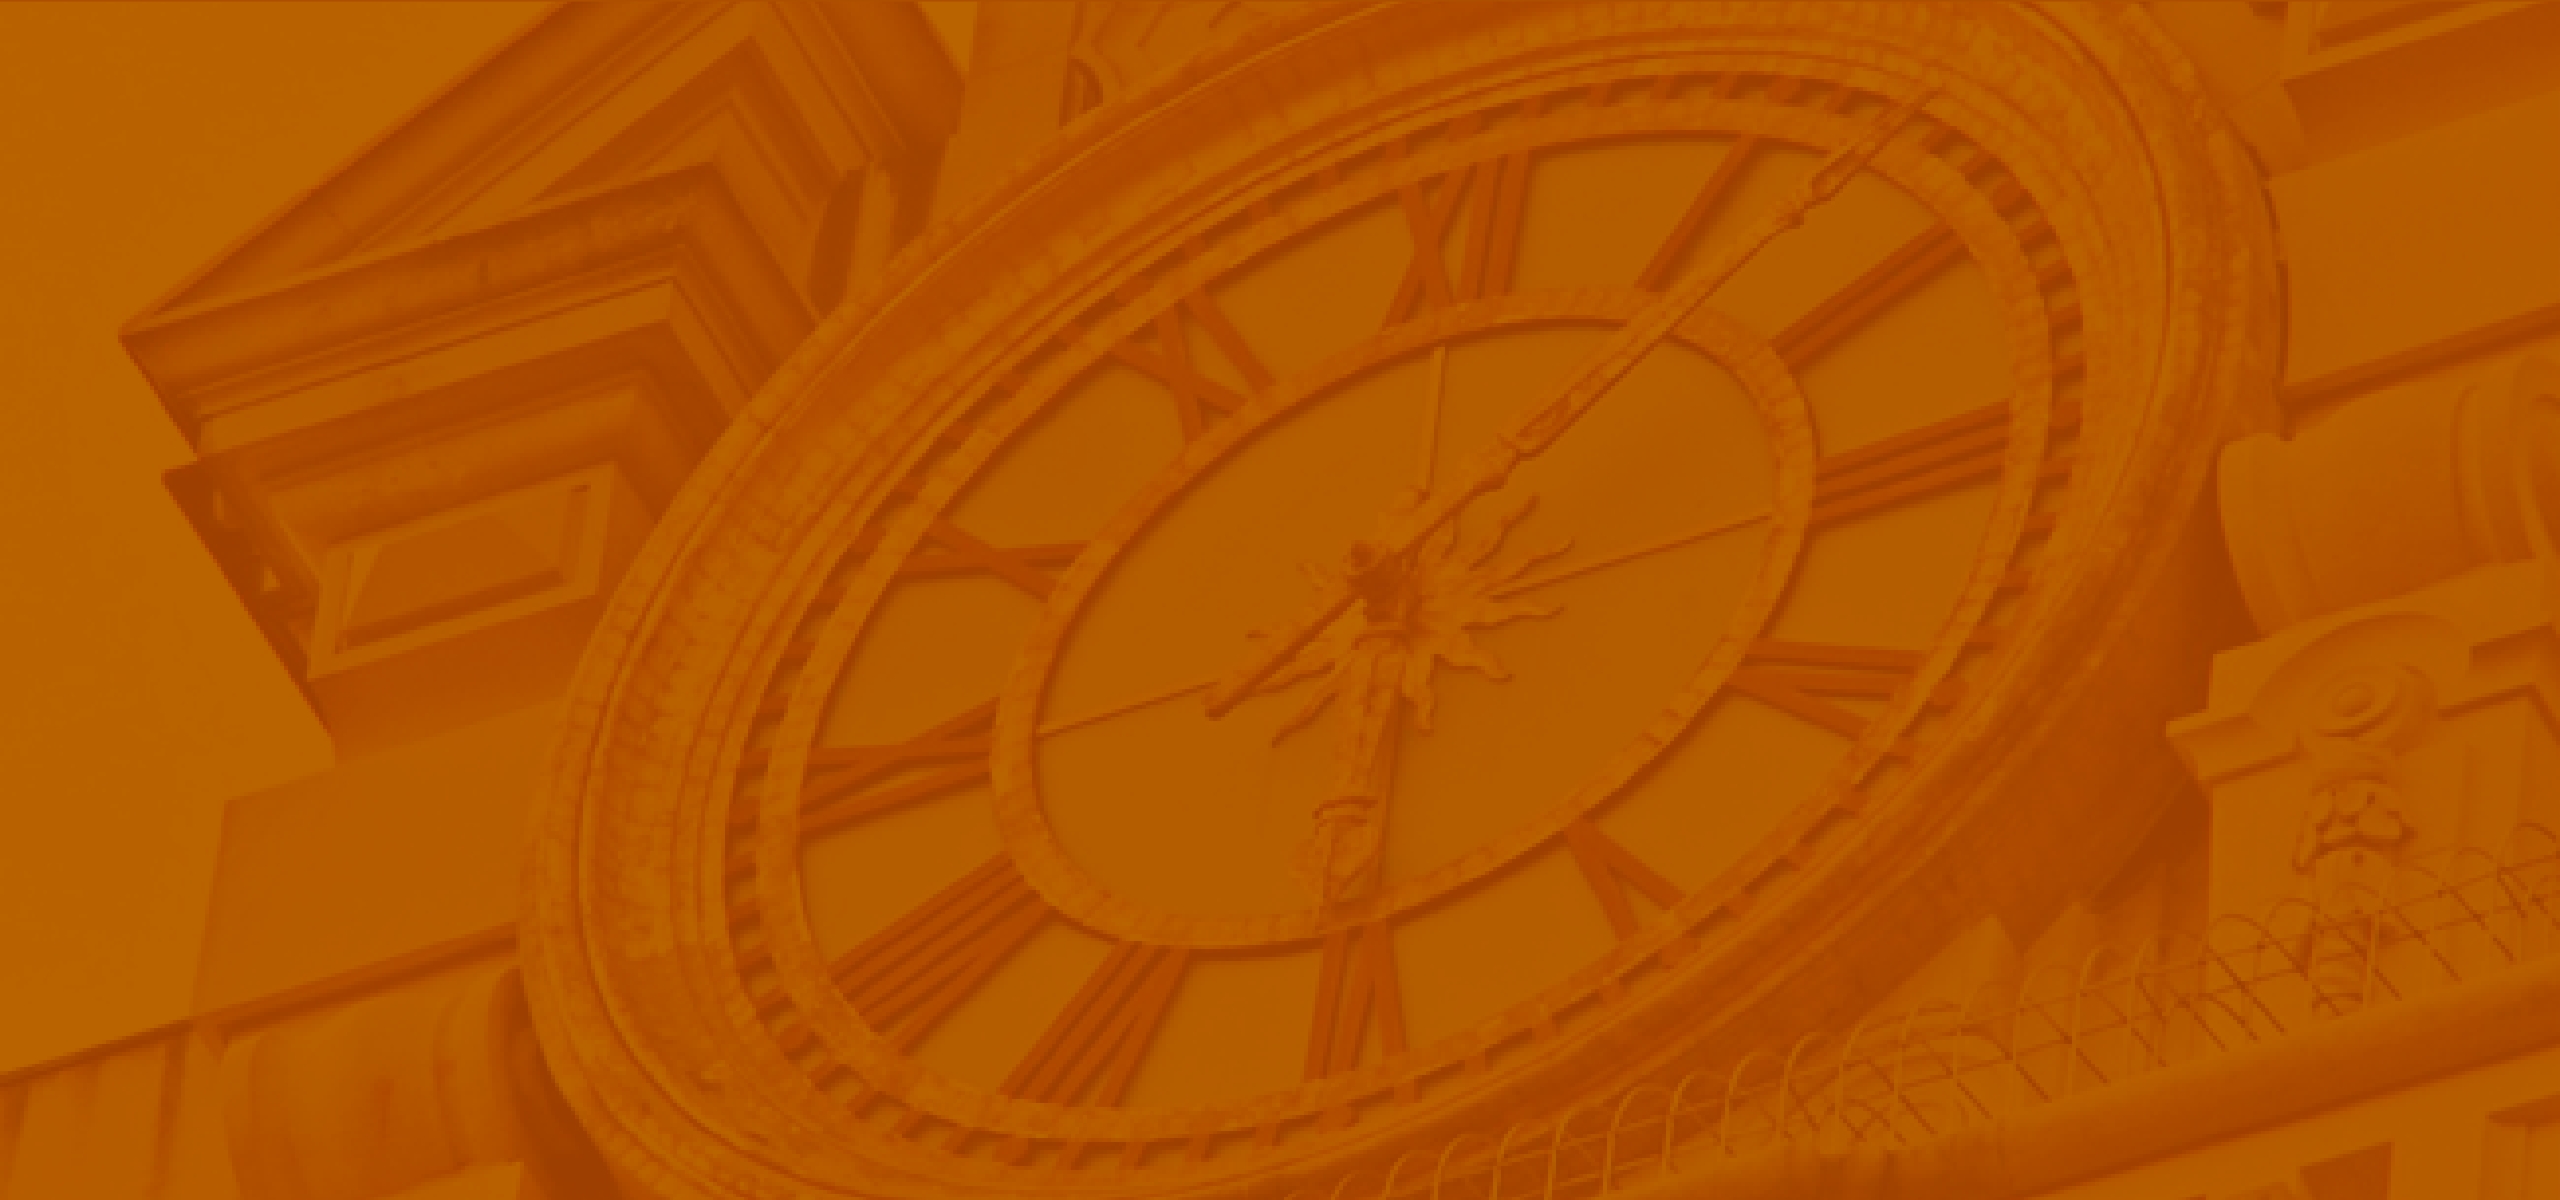 UT Tower detail photo of the clock with burnt orange overlay